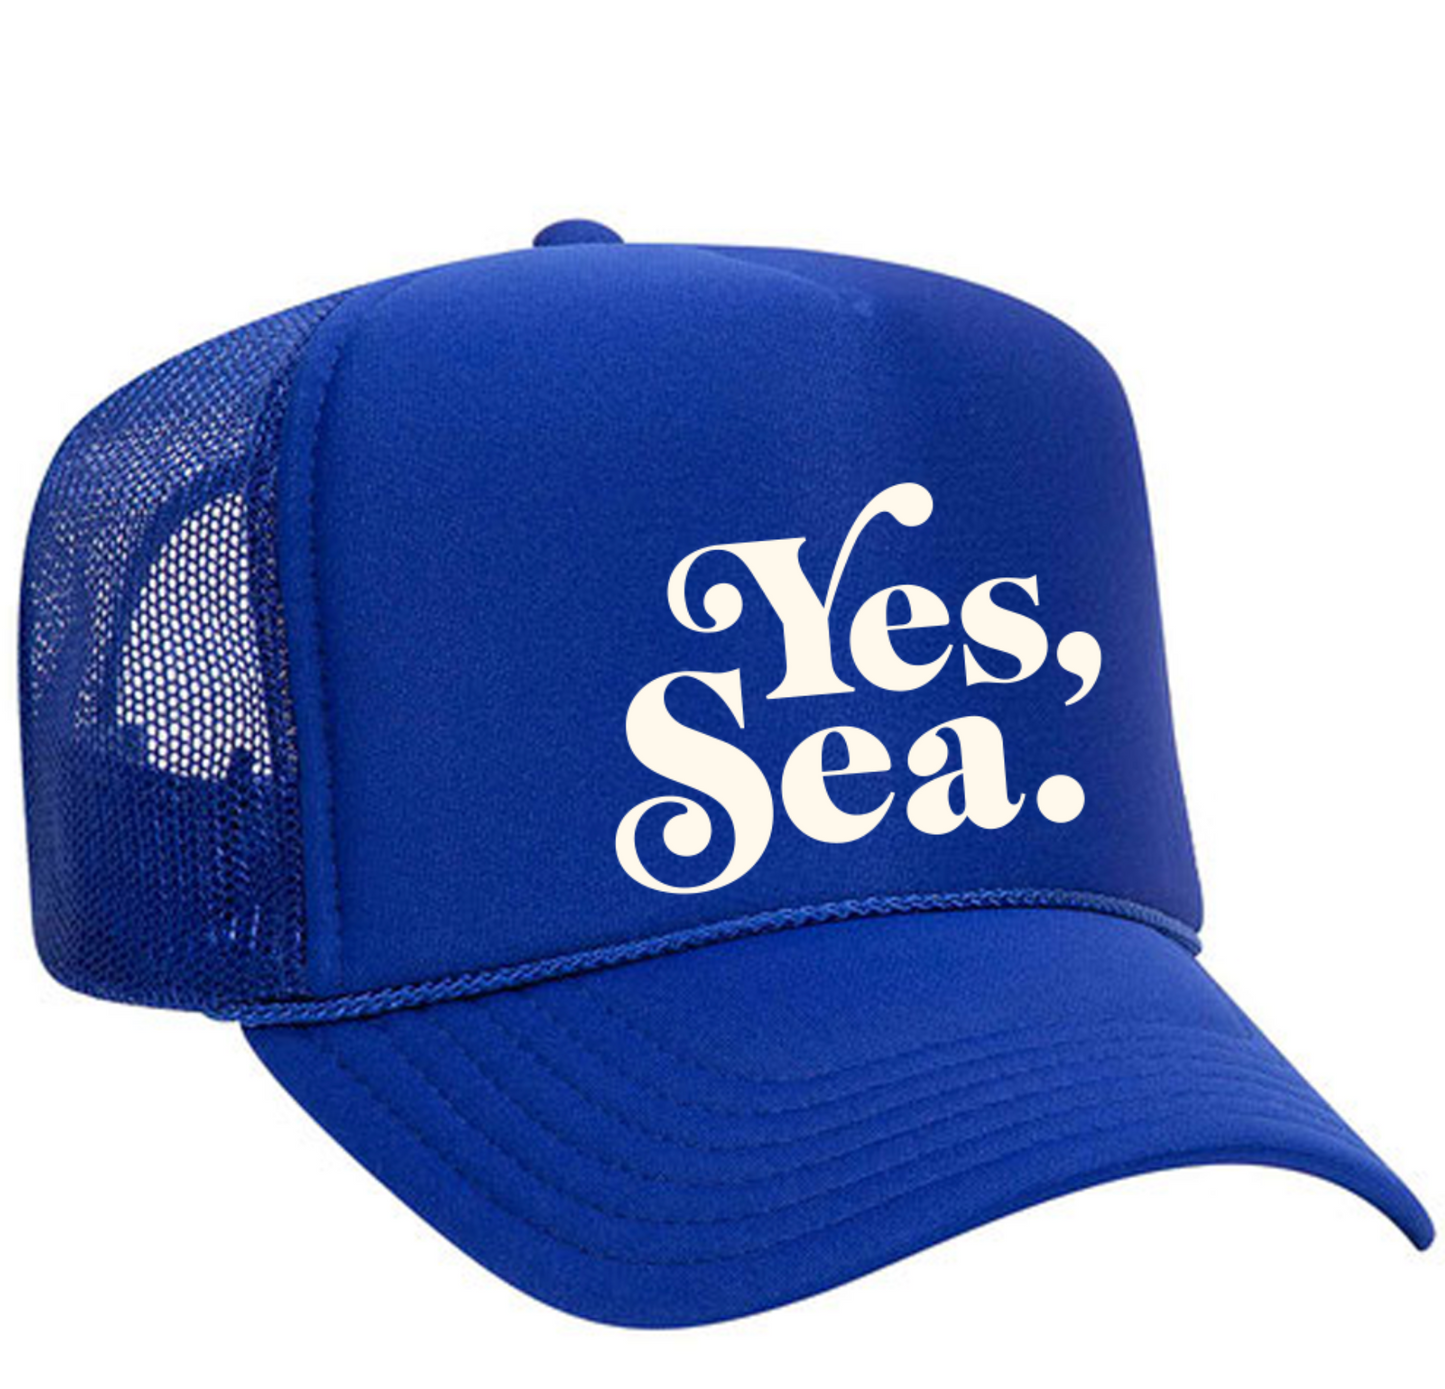 Yes, Sea. ™ Trucker Hat Royal